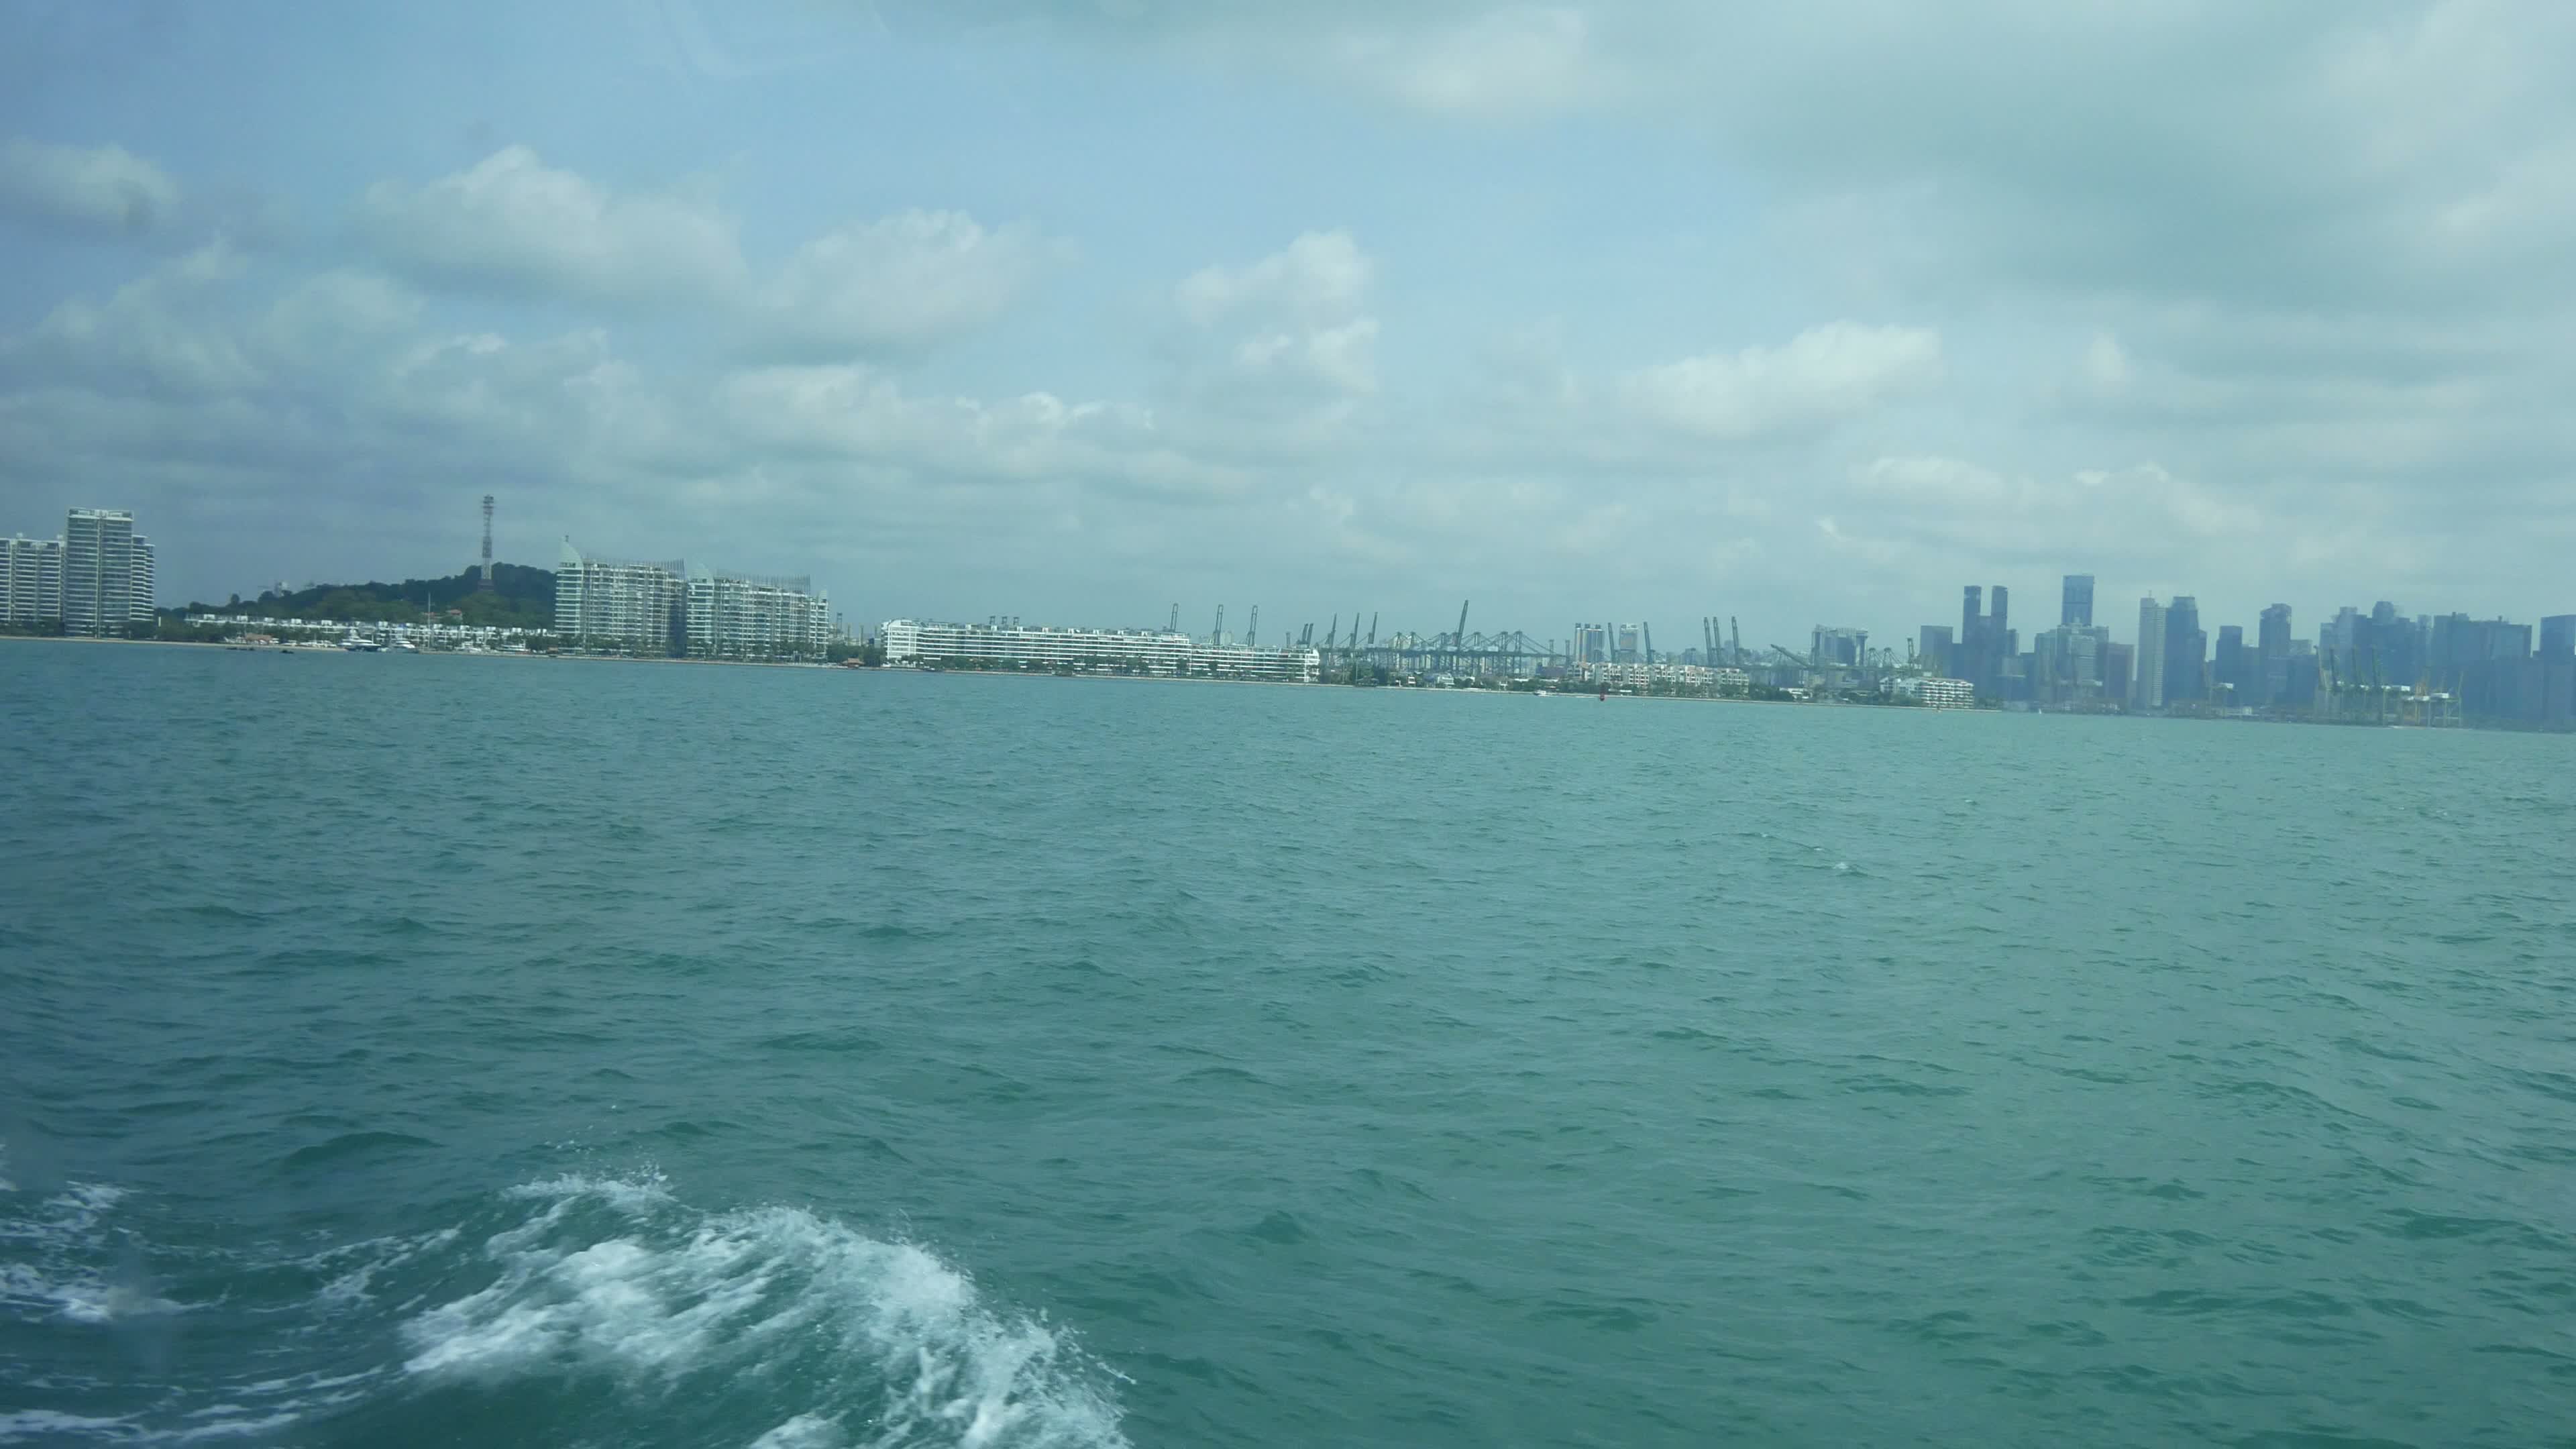 Singapore Island Cruise Video 6: St. John's Island to Kusu Island